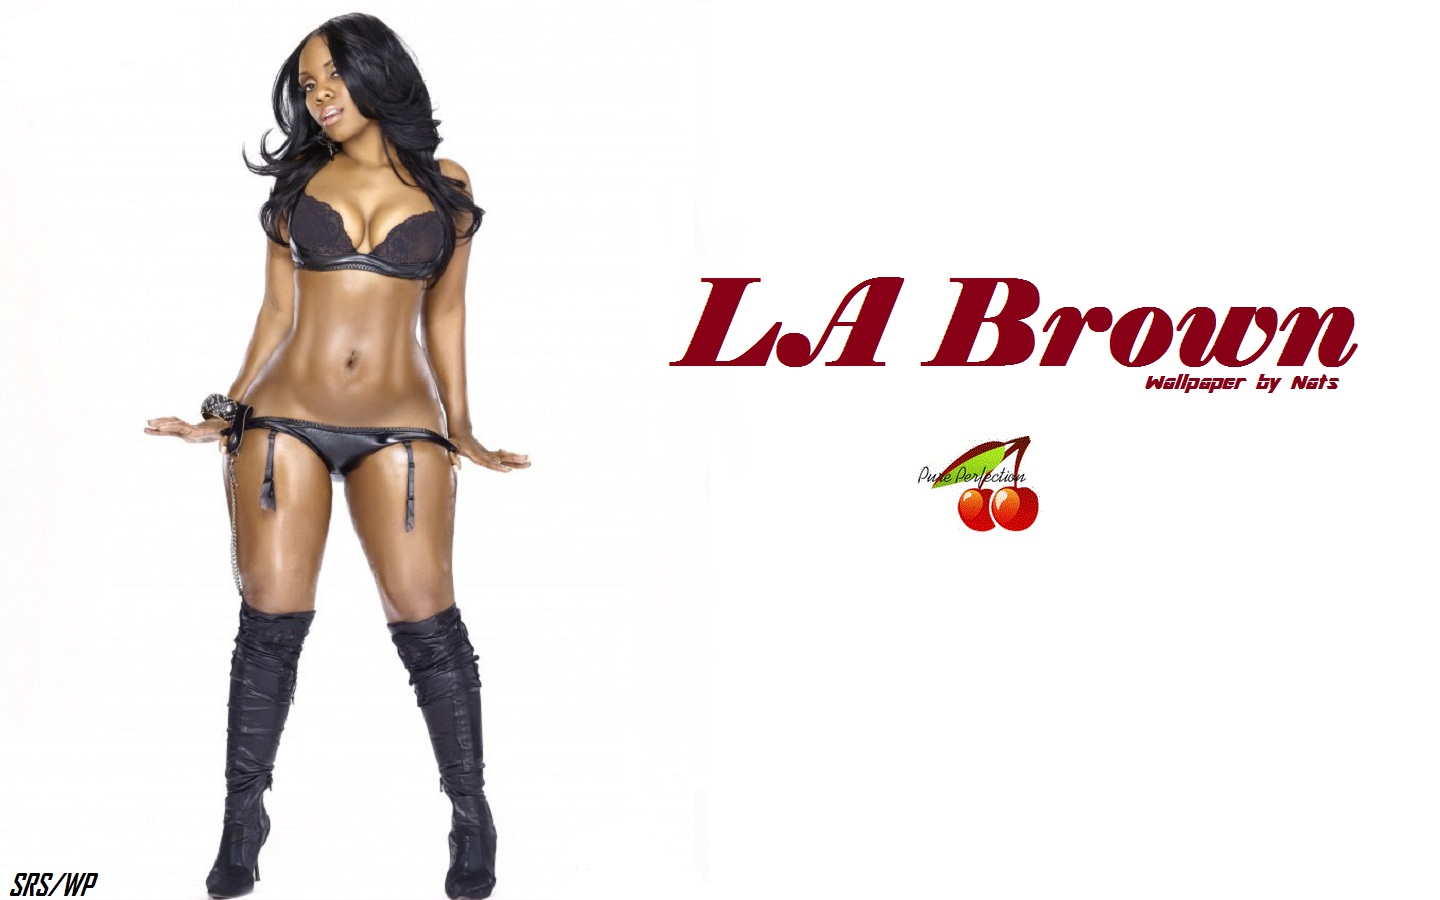 Download full size LA Brown wallpaper / Celebrities Female / 1440x900